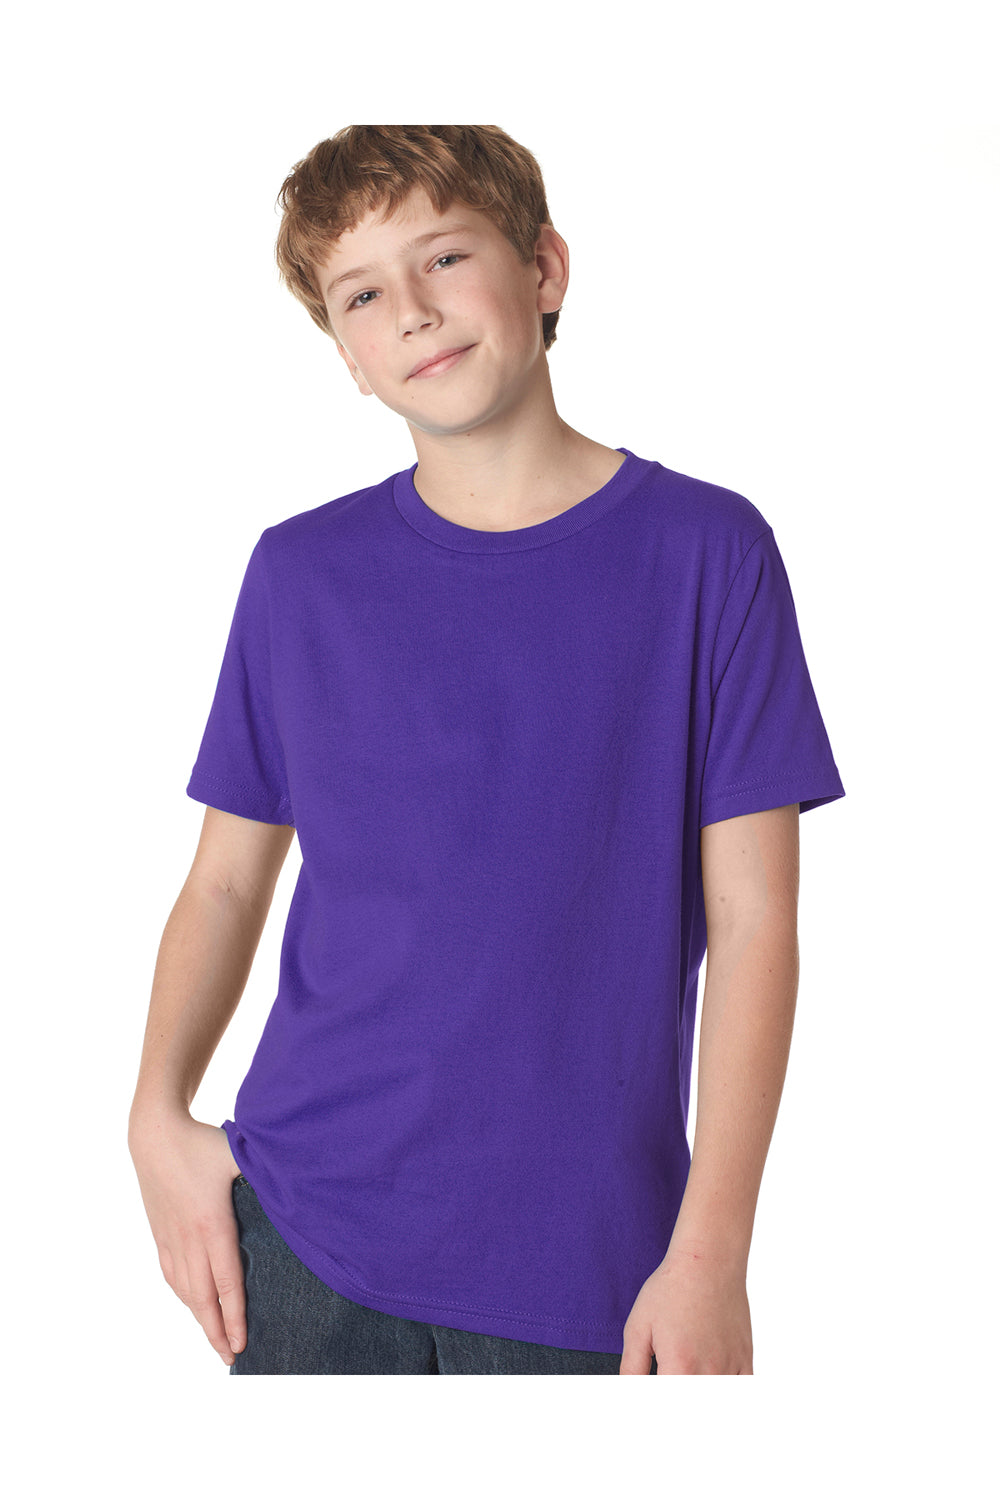 Next Level 3310 Youth Fine Jersey Short Sleeve Crewneck T-Shirt Purple Rush Front